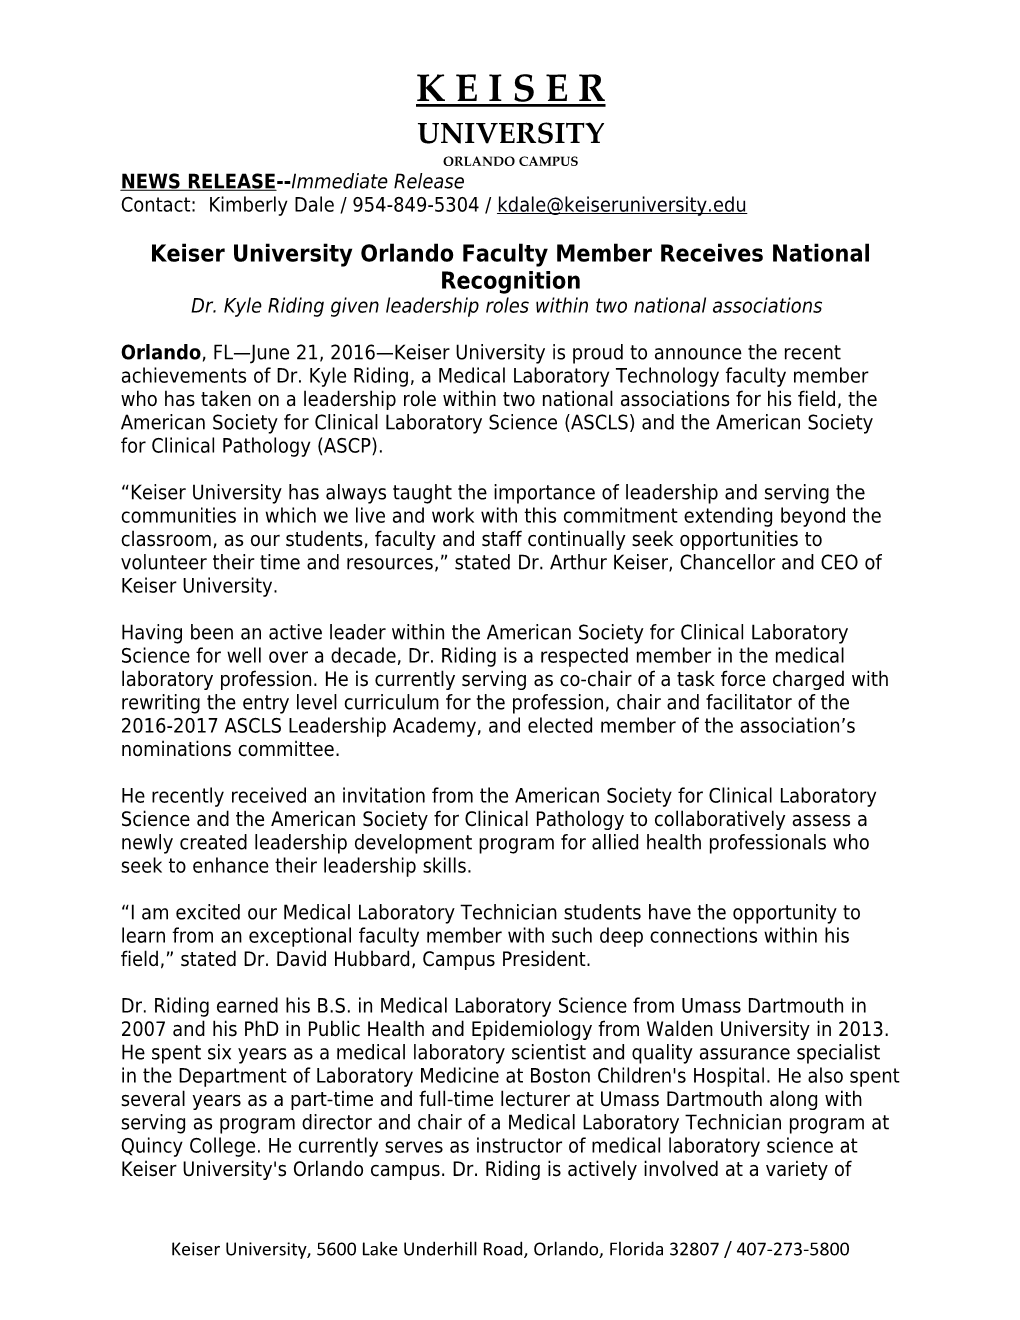 Keiser University Orlando Faculty Member Receives National Recognition